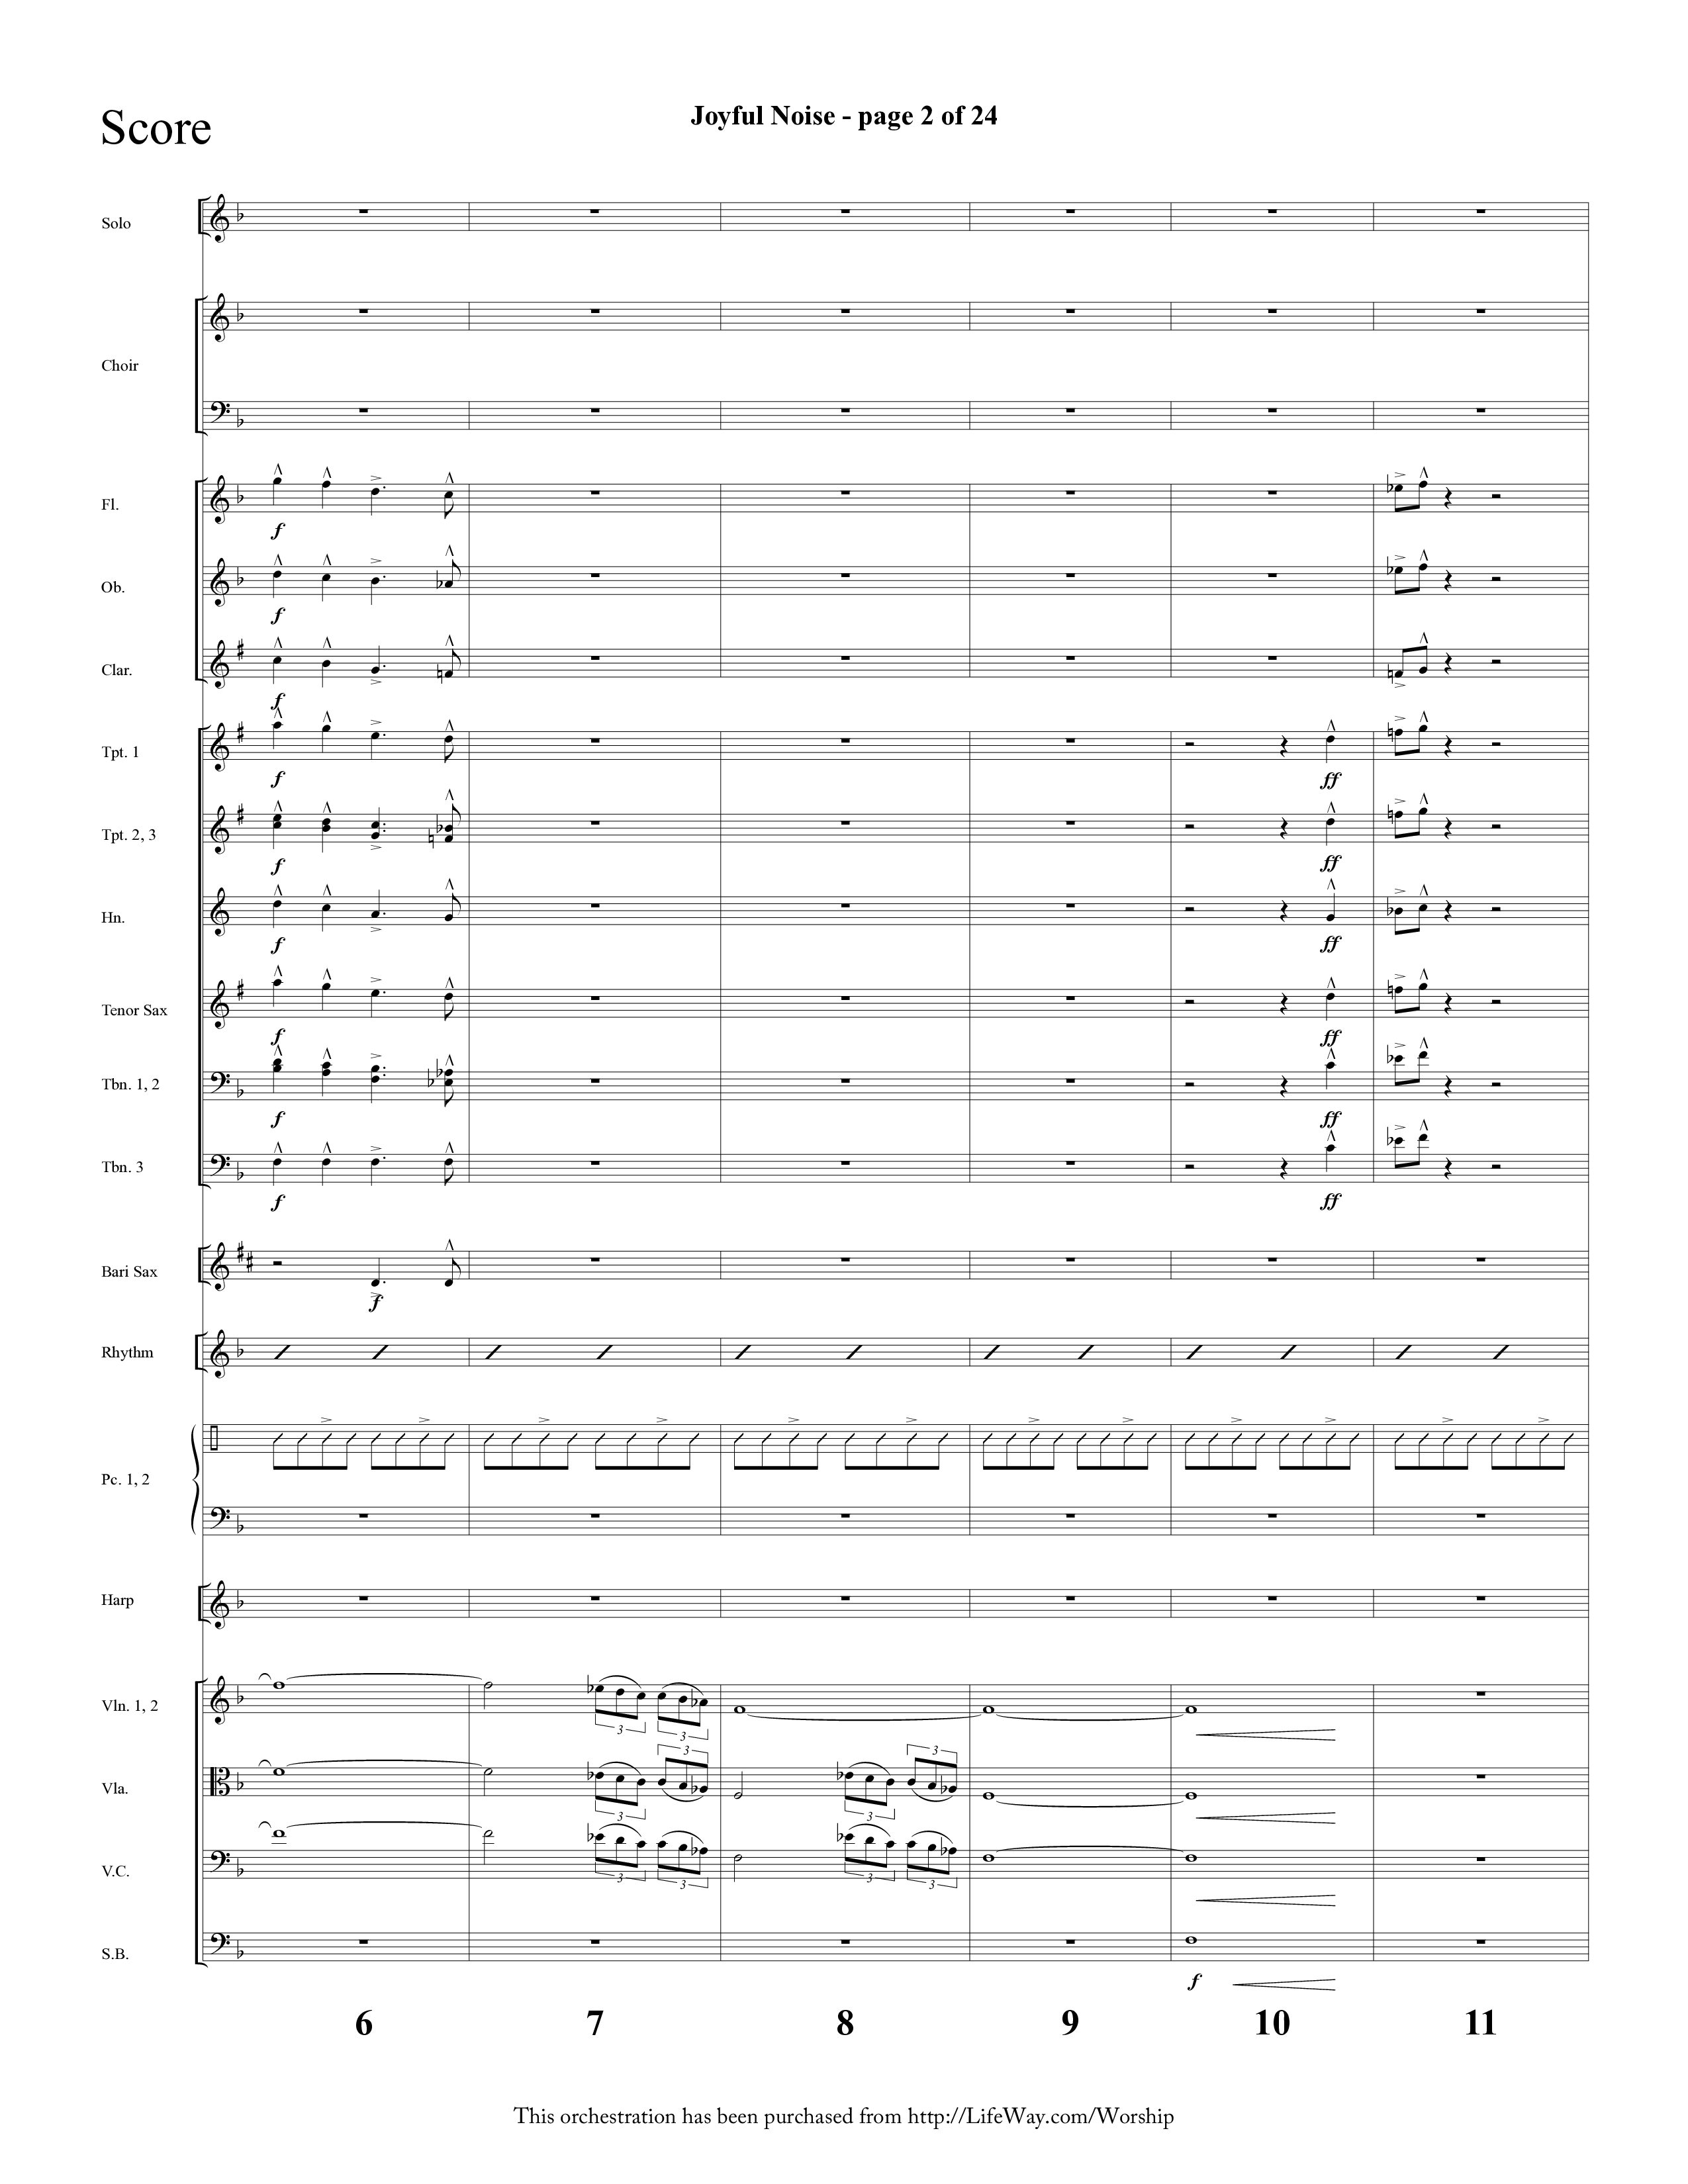 Joyful Noise (Choral Anthem SATB) Orchestration (Lifeway Choral / Arr. Cliff Duren)